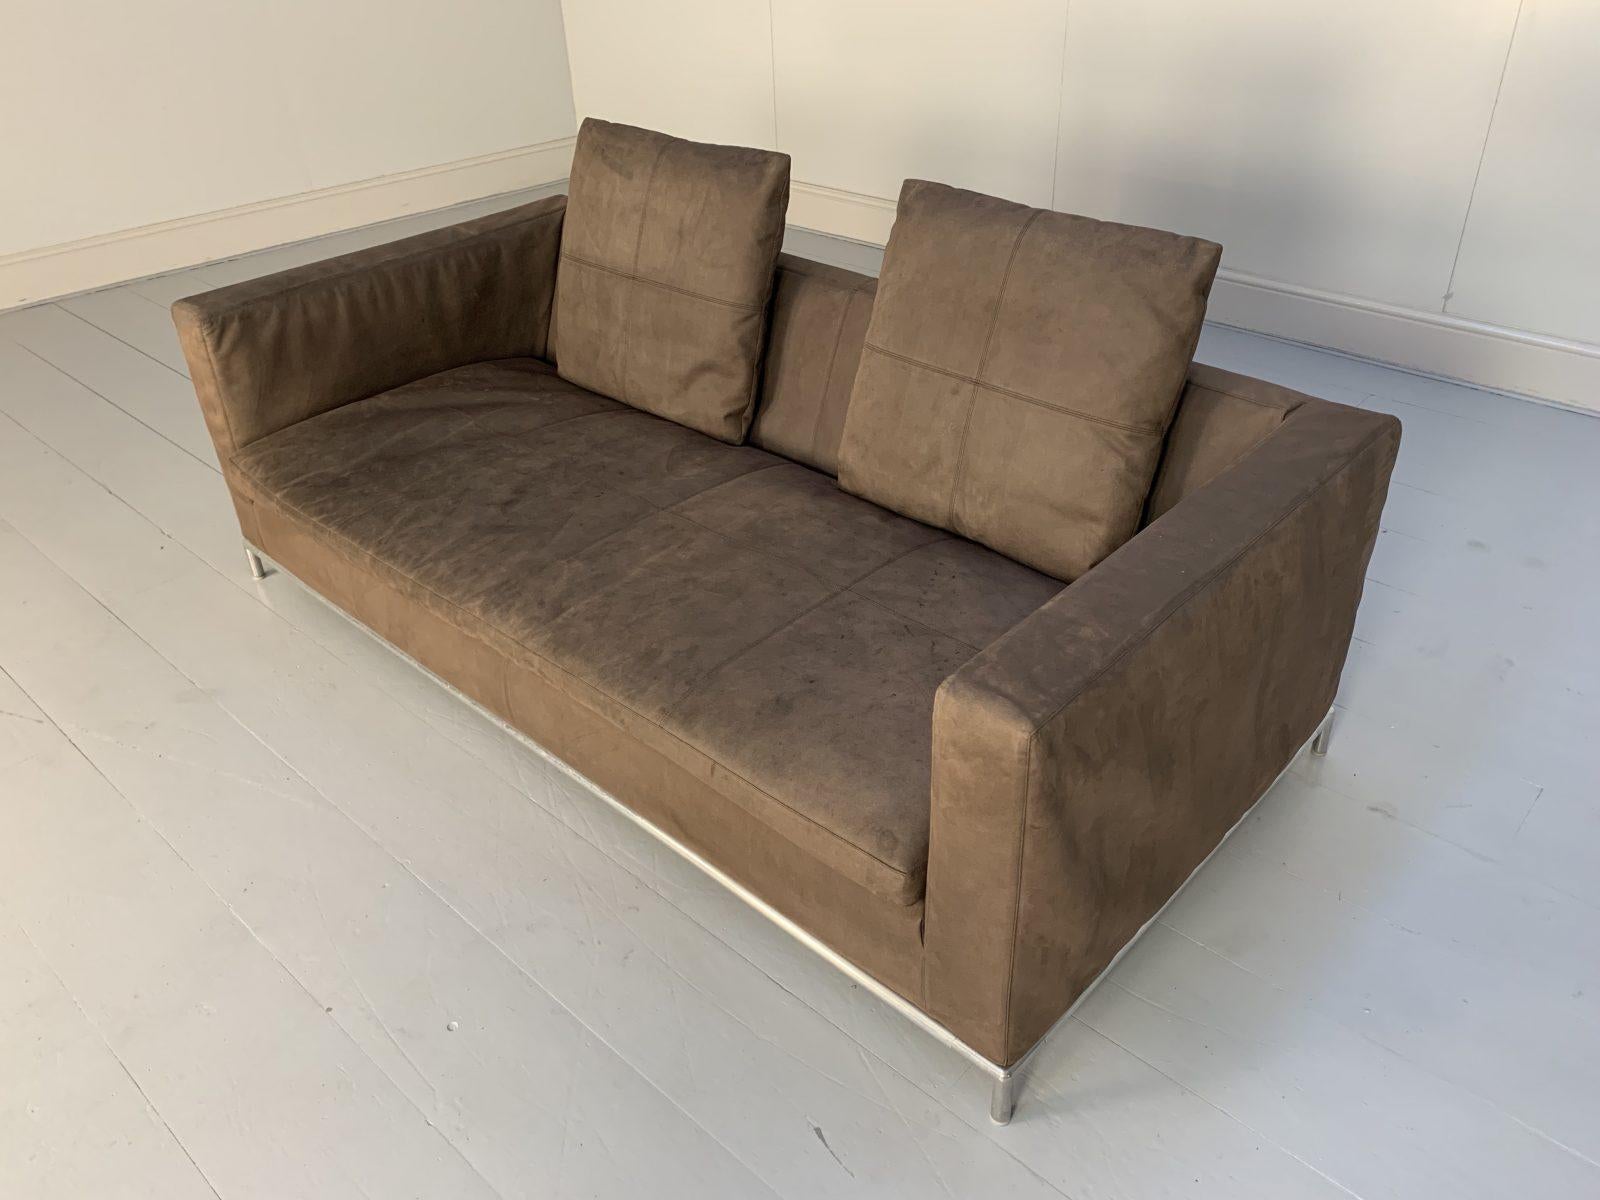 B&B Italia “George” Sofa 2.5-Seat Sofa in Brown Alcantara Suede In Good Condition For Sale In Barrowford, GB